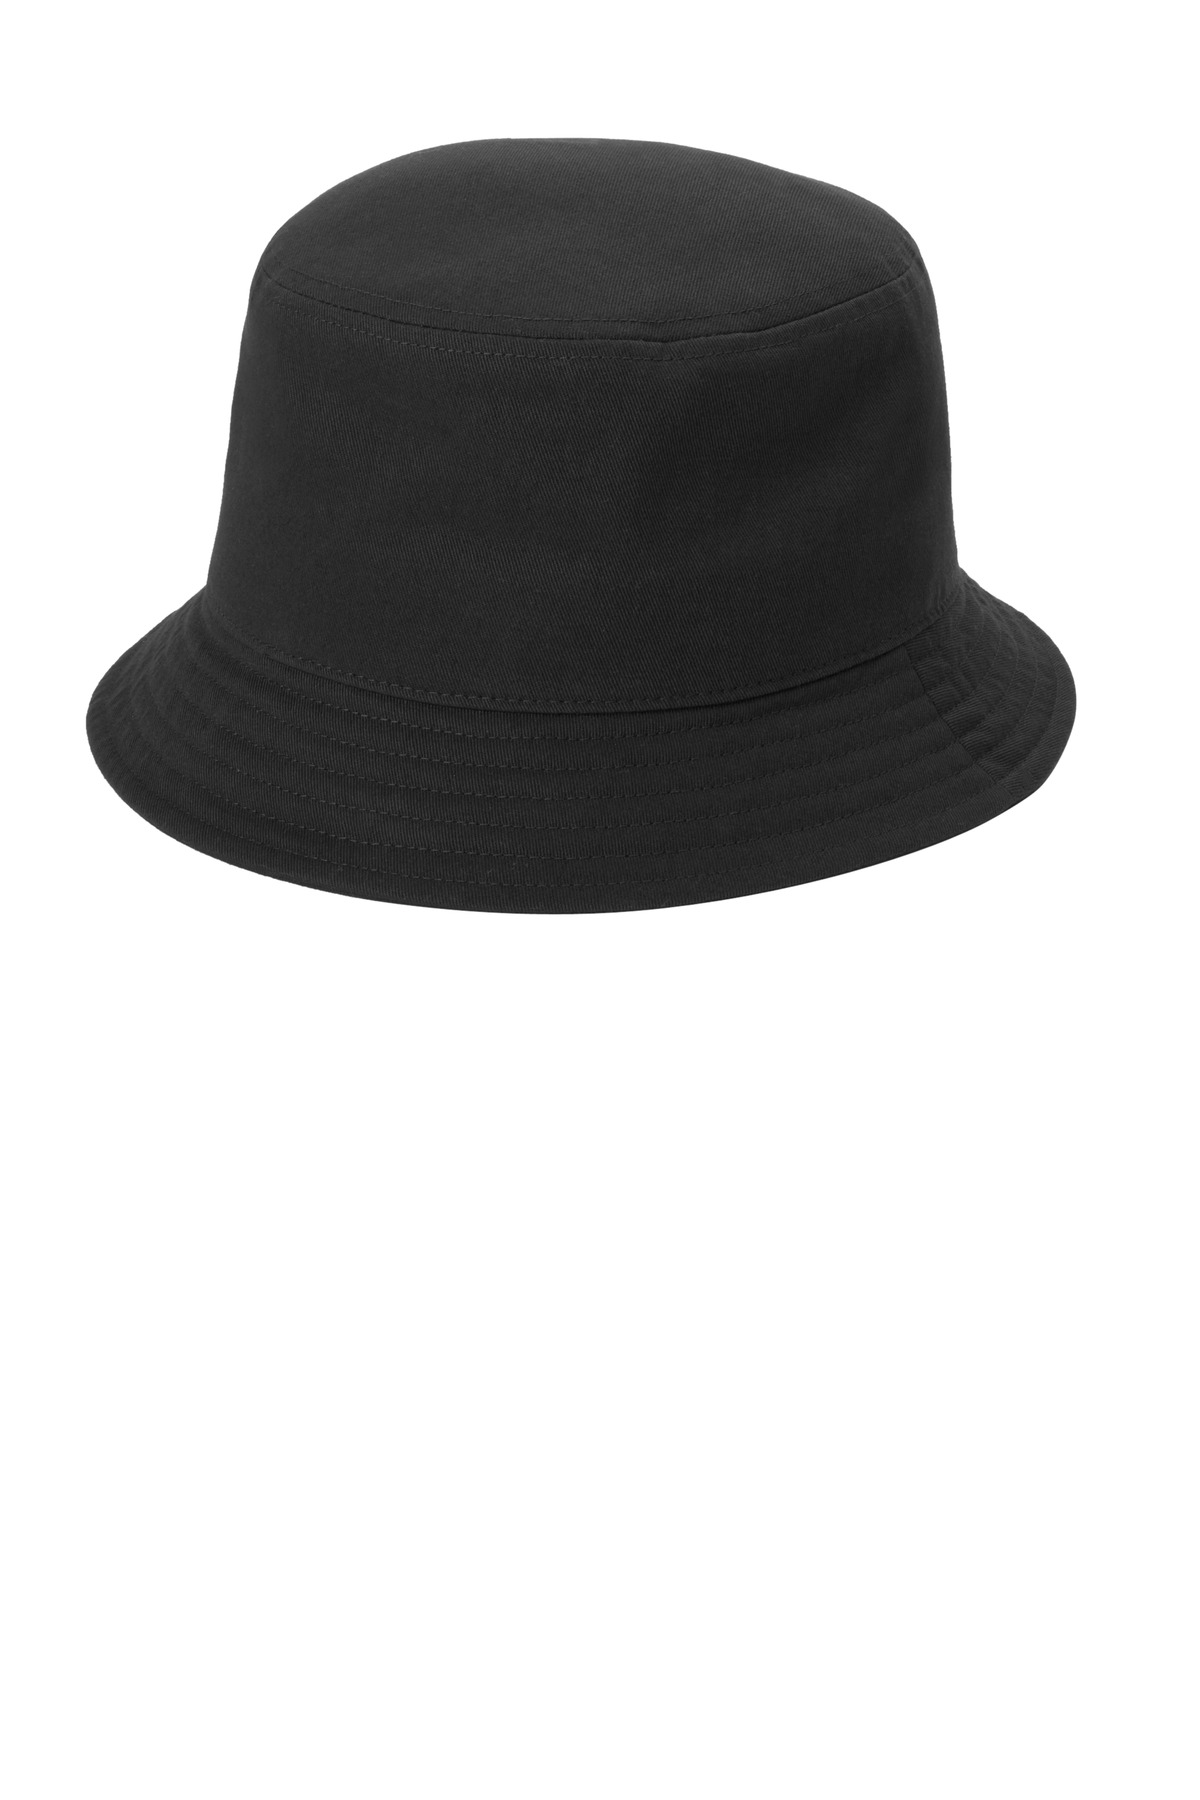 Port Authority Twill Short Brim Bucket Hat C976